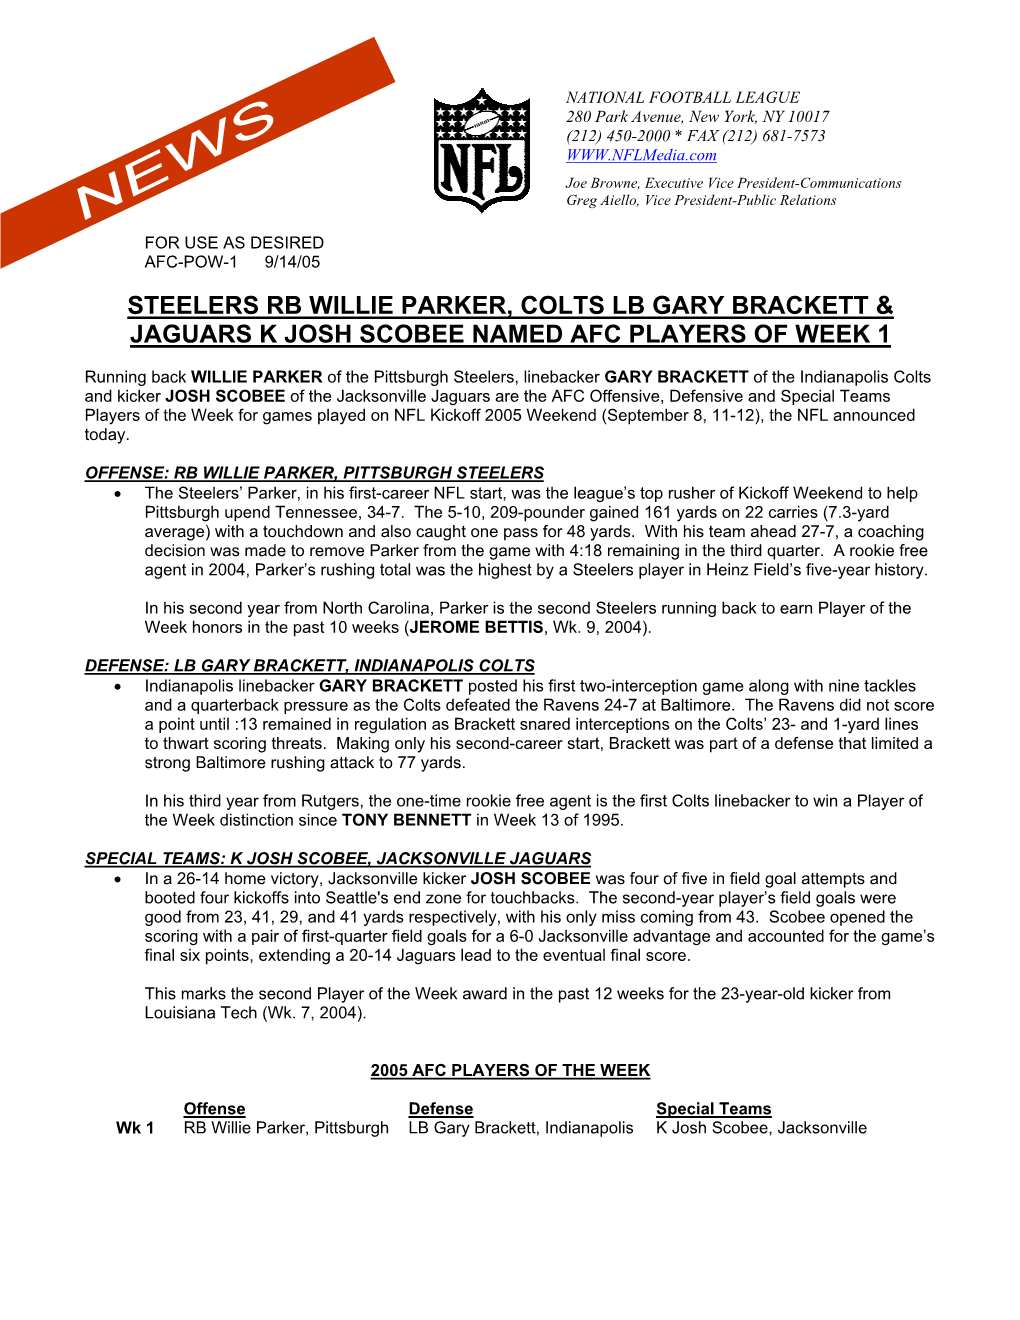 Steelers Rb Willie Parker, Colts Lb Gary Brackett & Jaguars K Josh Scobee Named Afc Players of Week 1